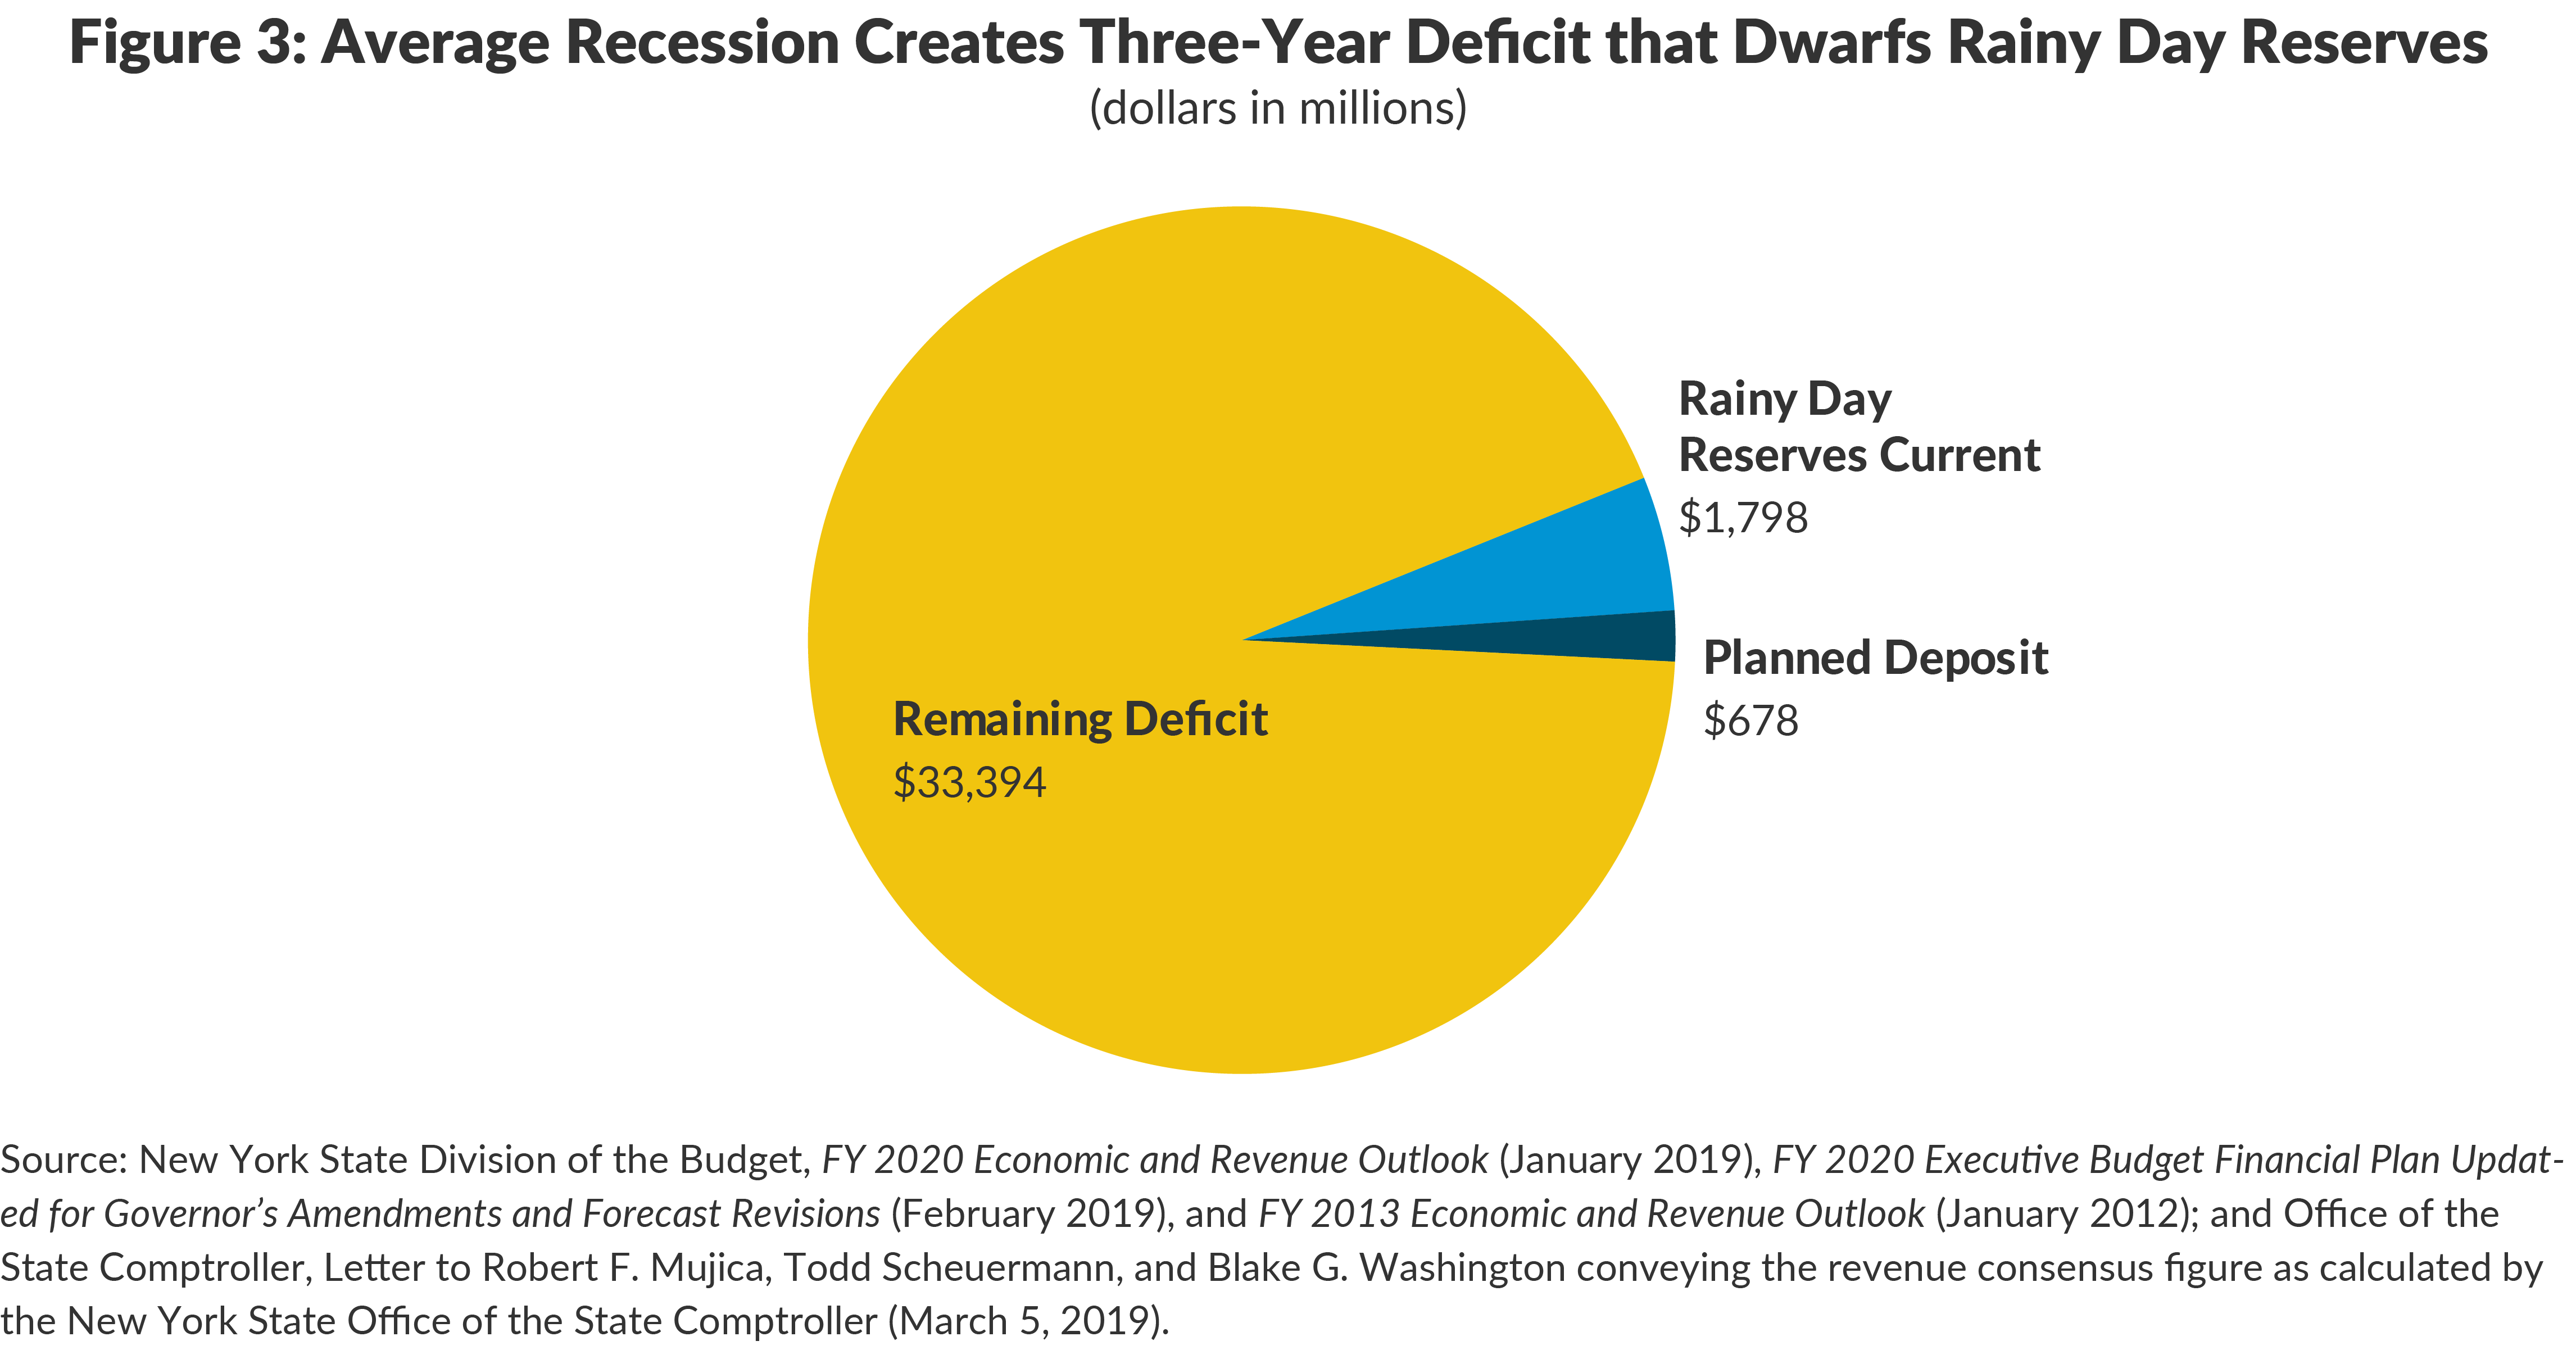 Figure 3: Average Recession Creates 3-Year Deficit that Dwarfs Rainy Day Reserves